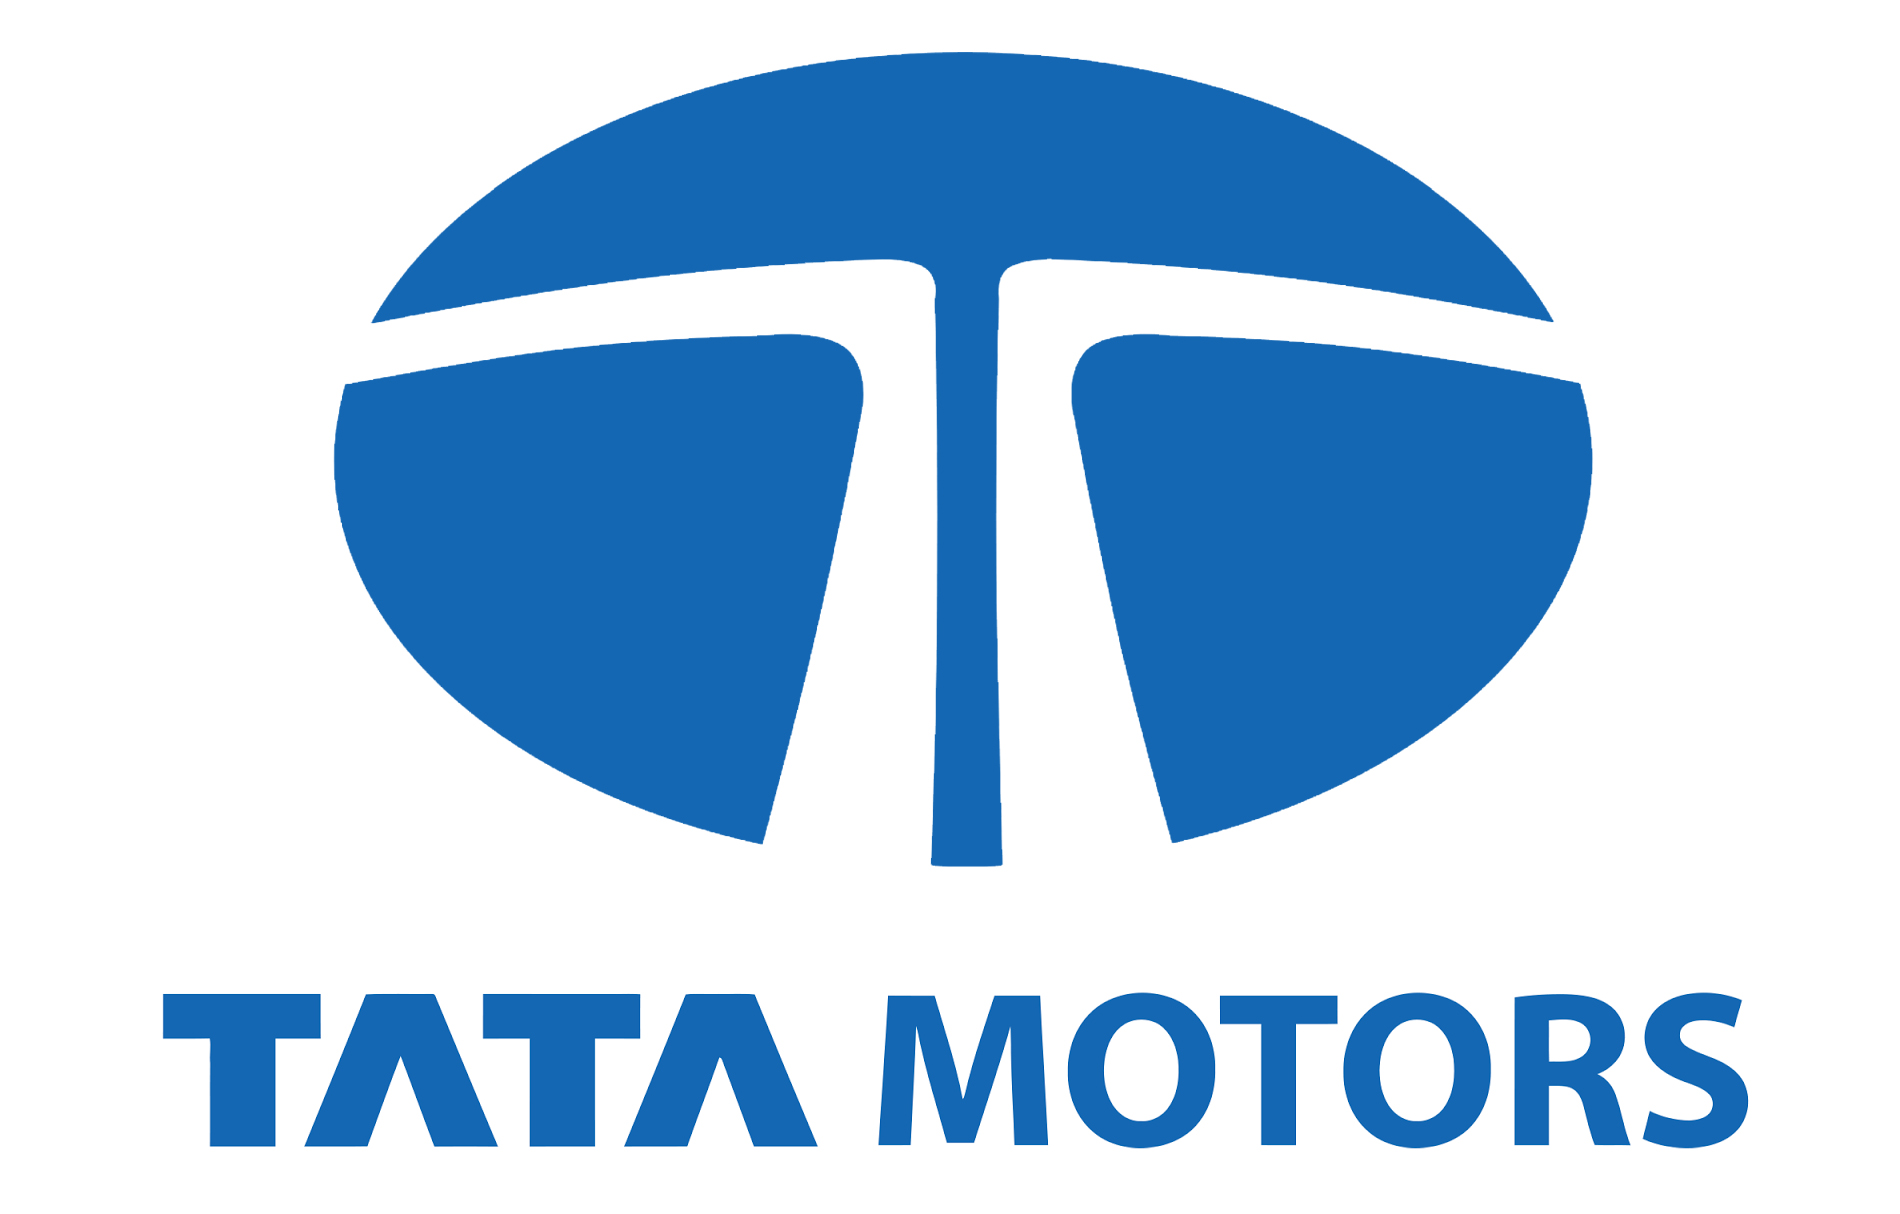 Tata Motors Cars Showroom - J V Motors Logo